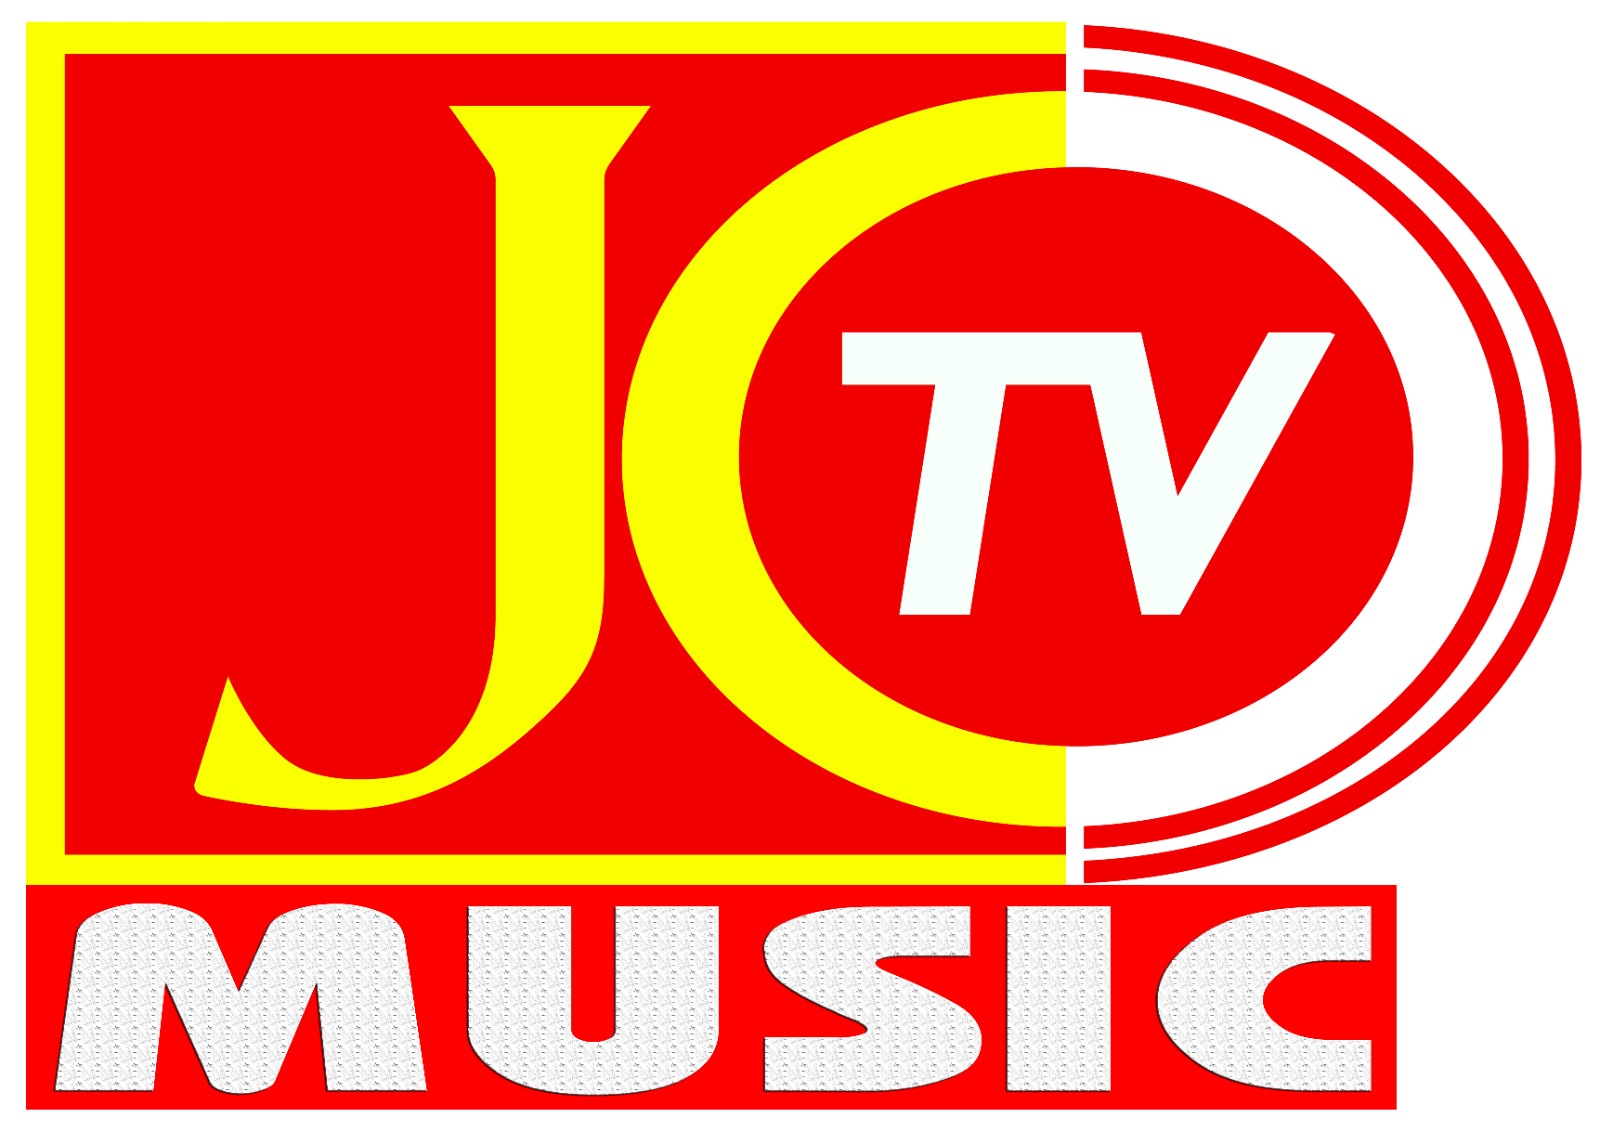 JC TV Music